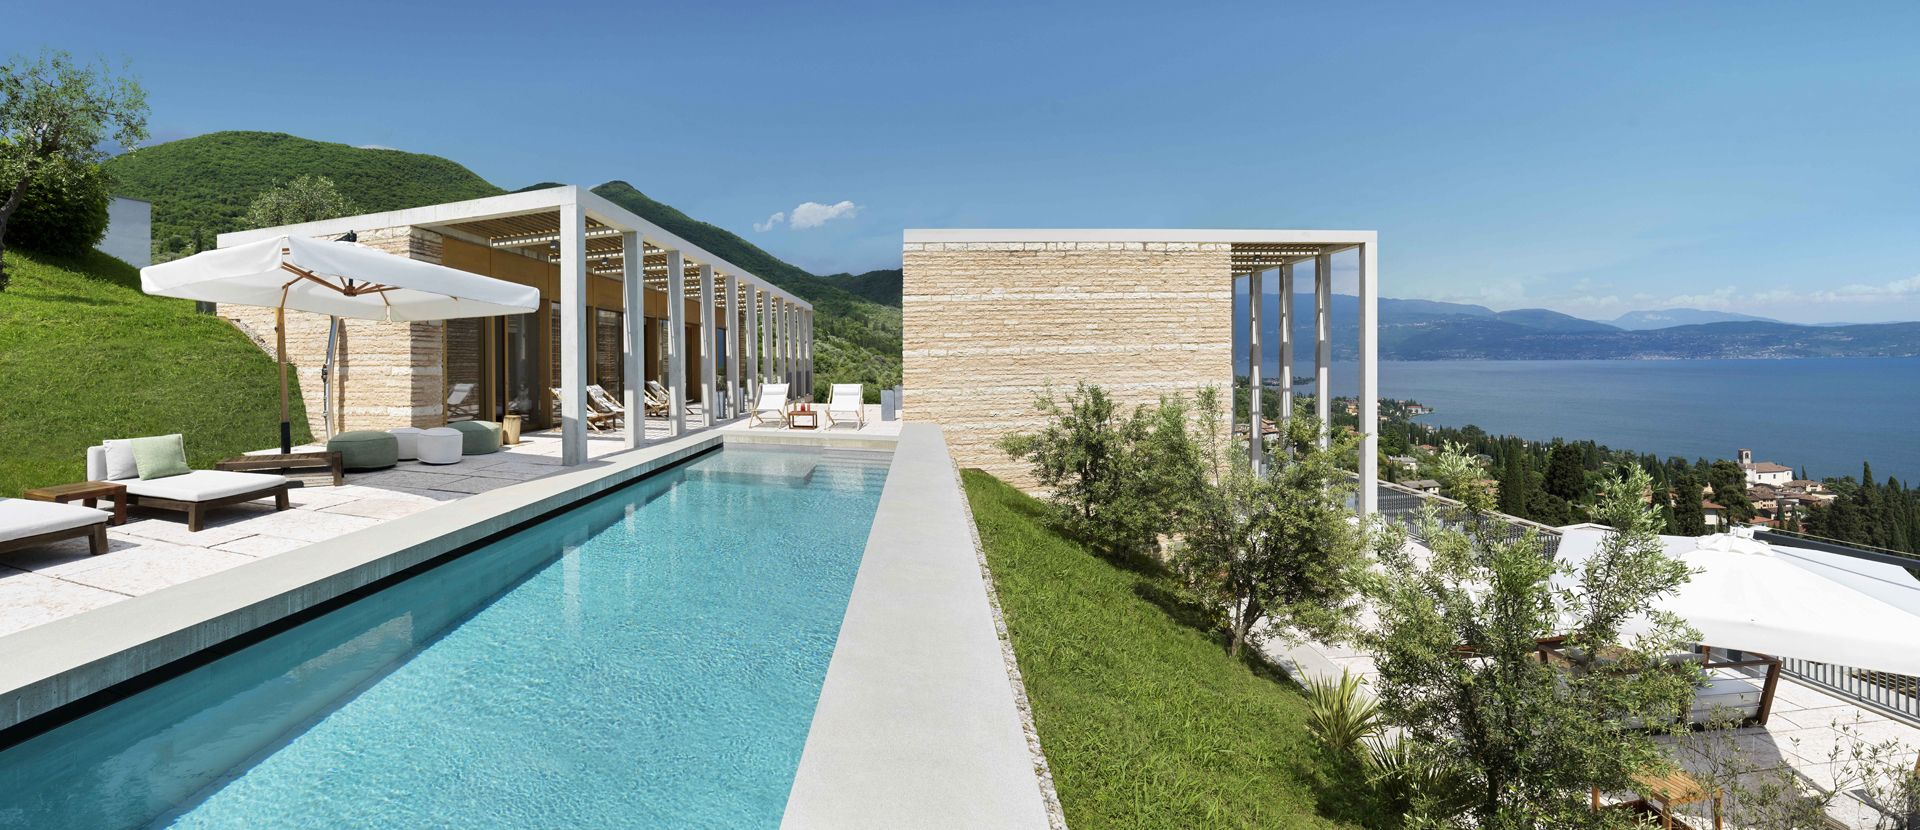 Eden Reserve Hotel & Villas, Lake Garda